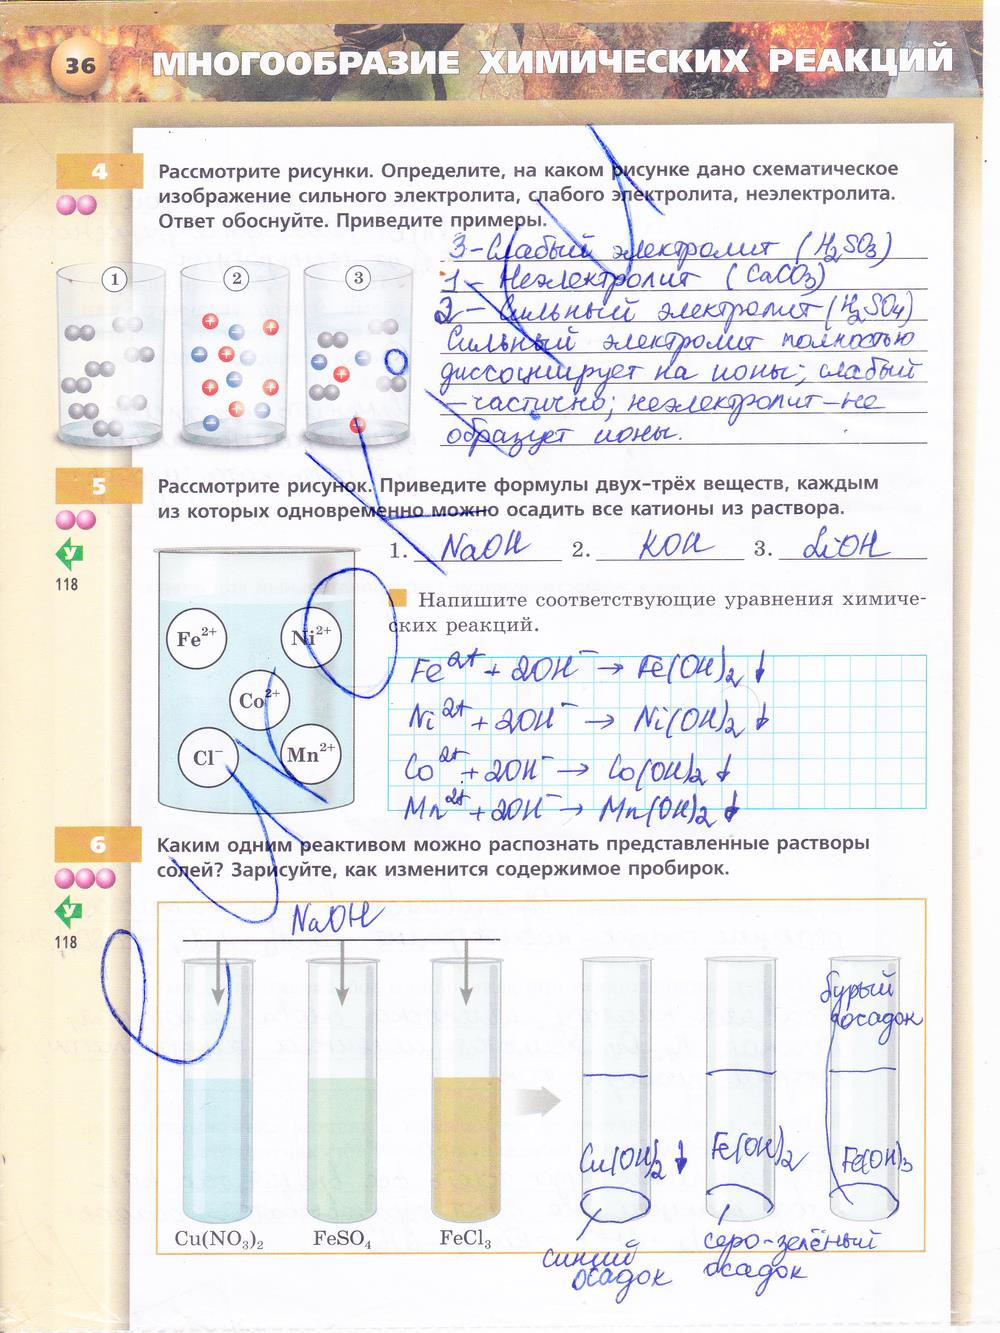 гдз 9 класс тетрадь-тренажёр страница 36 химия Гара